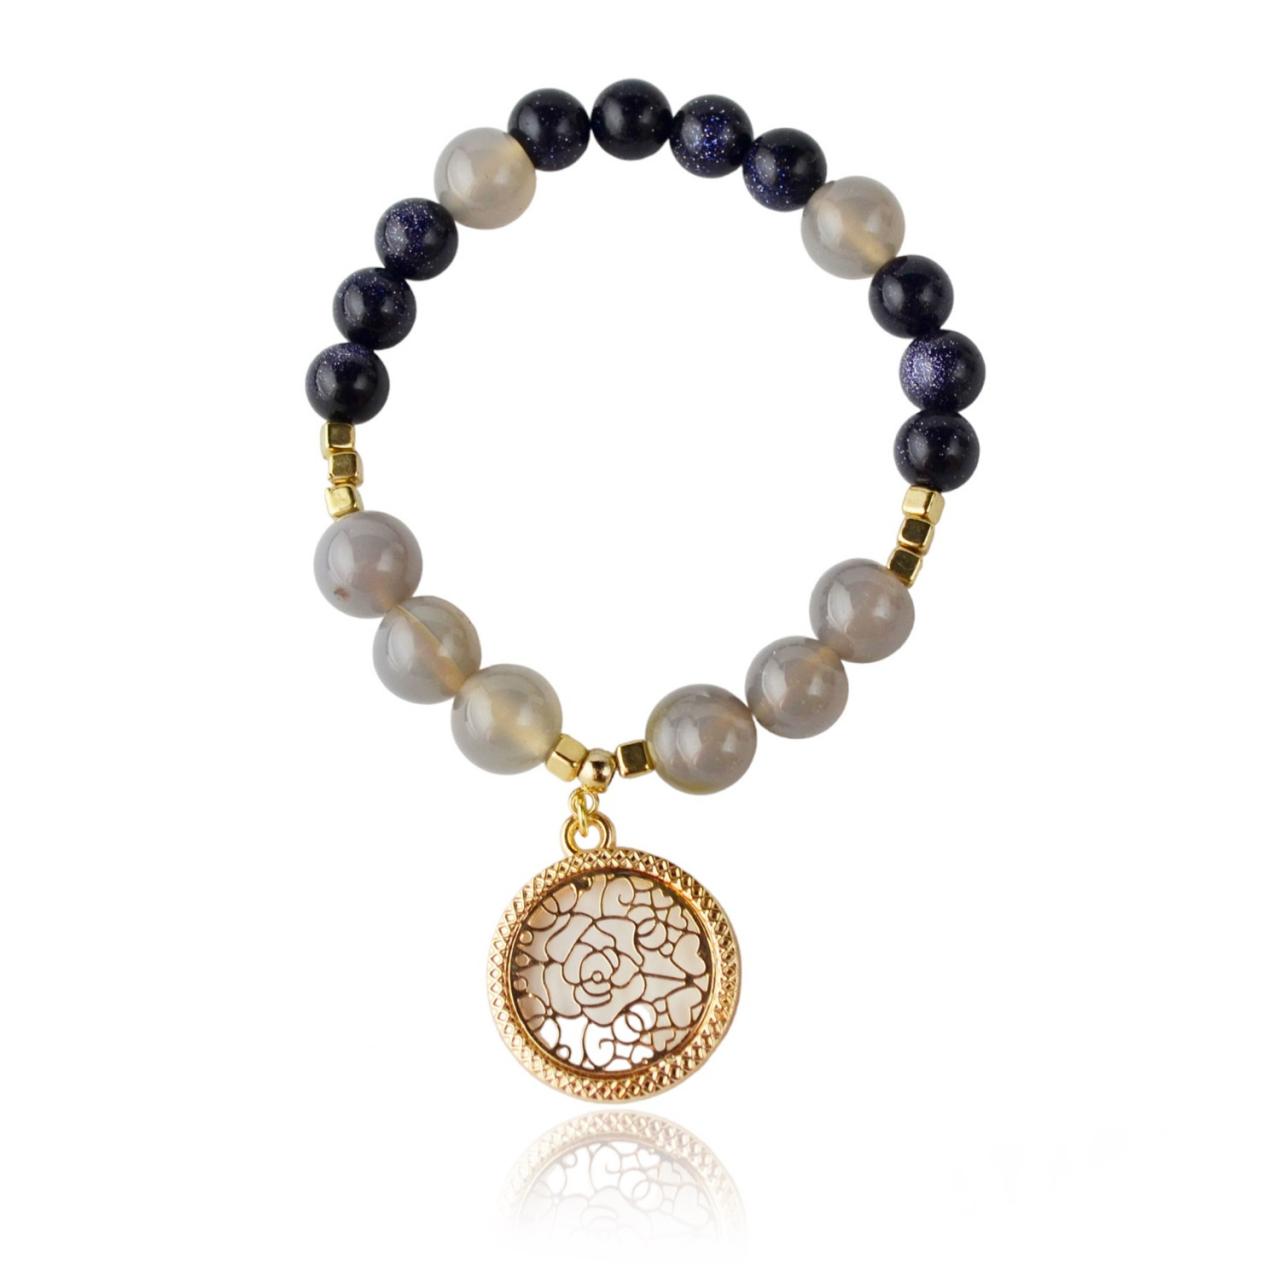 Agate, Blue Sand Stone Bracelet With Pendant, For Women Or Girls, The Price, 5% Off | Kk02